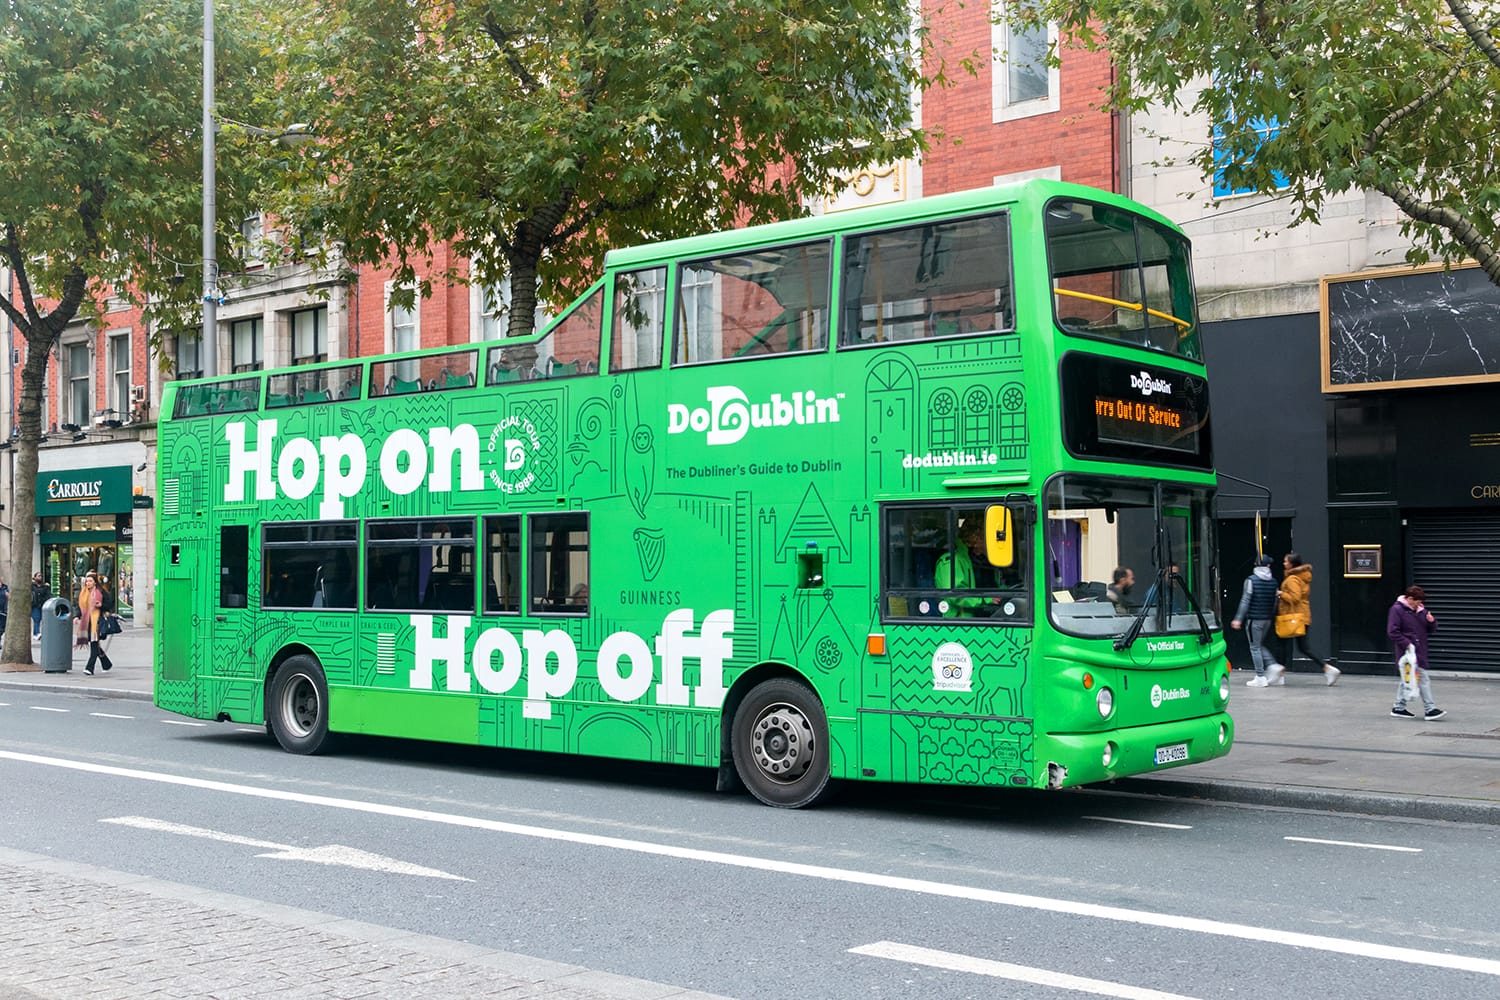 big bus tours dublin ireland